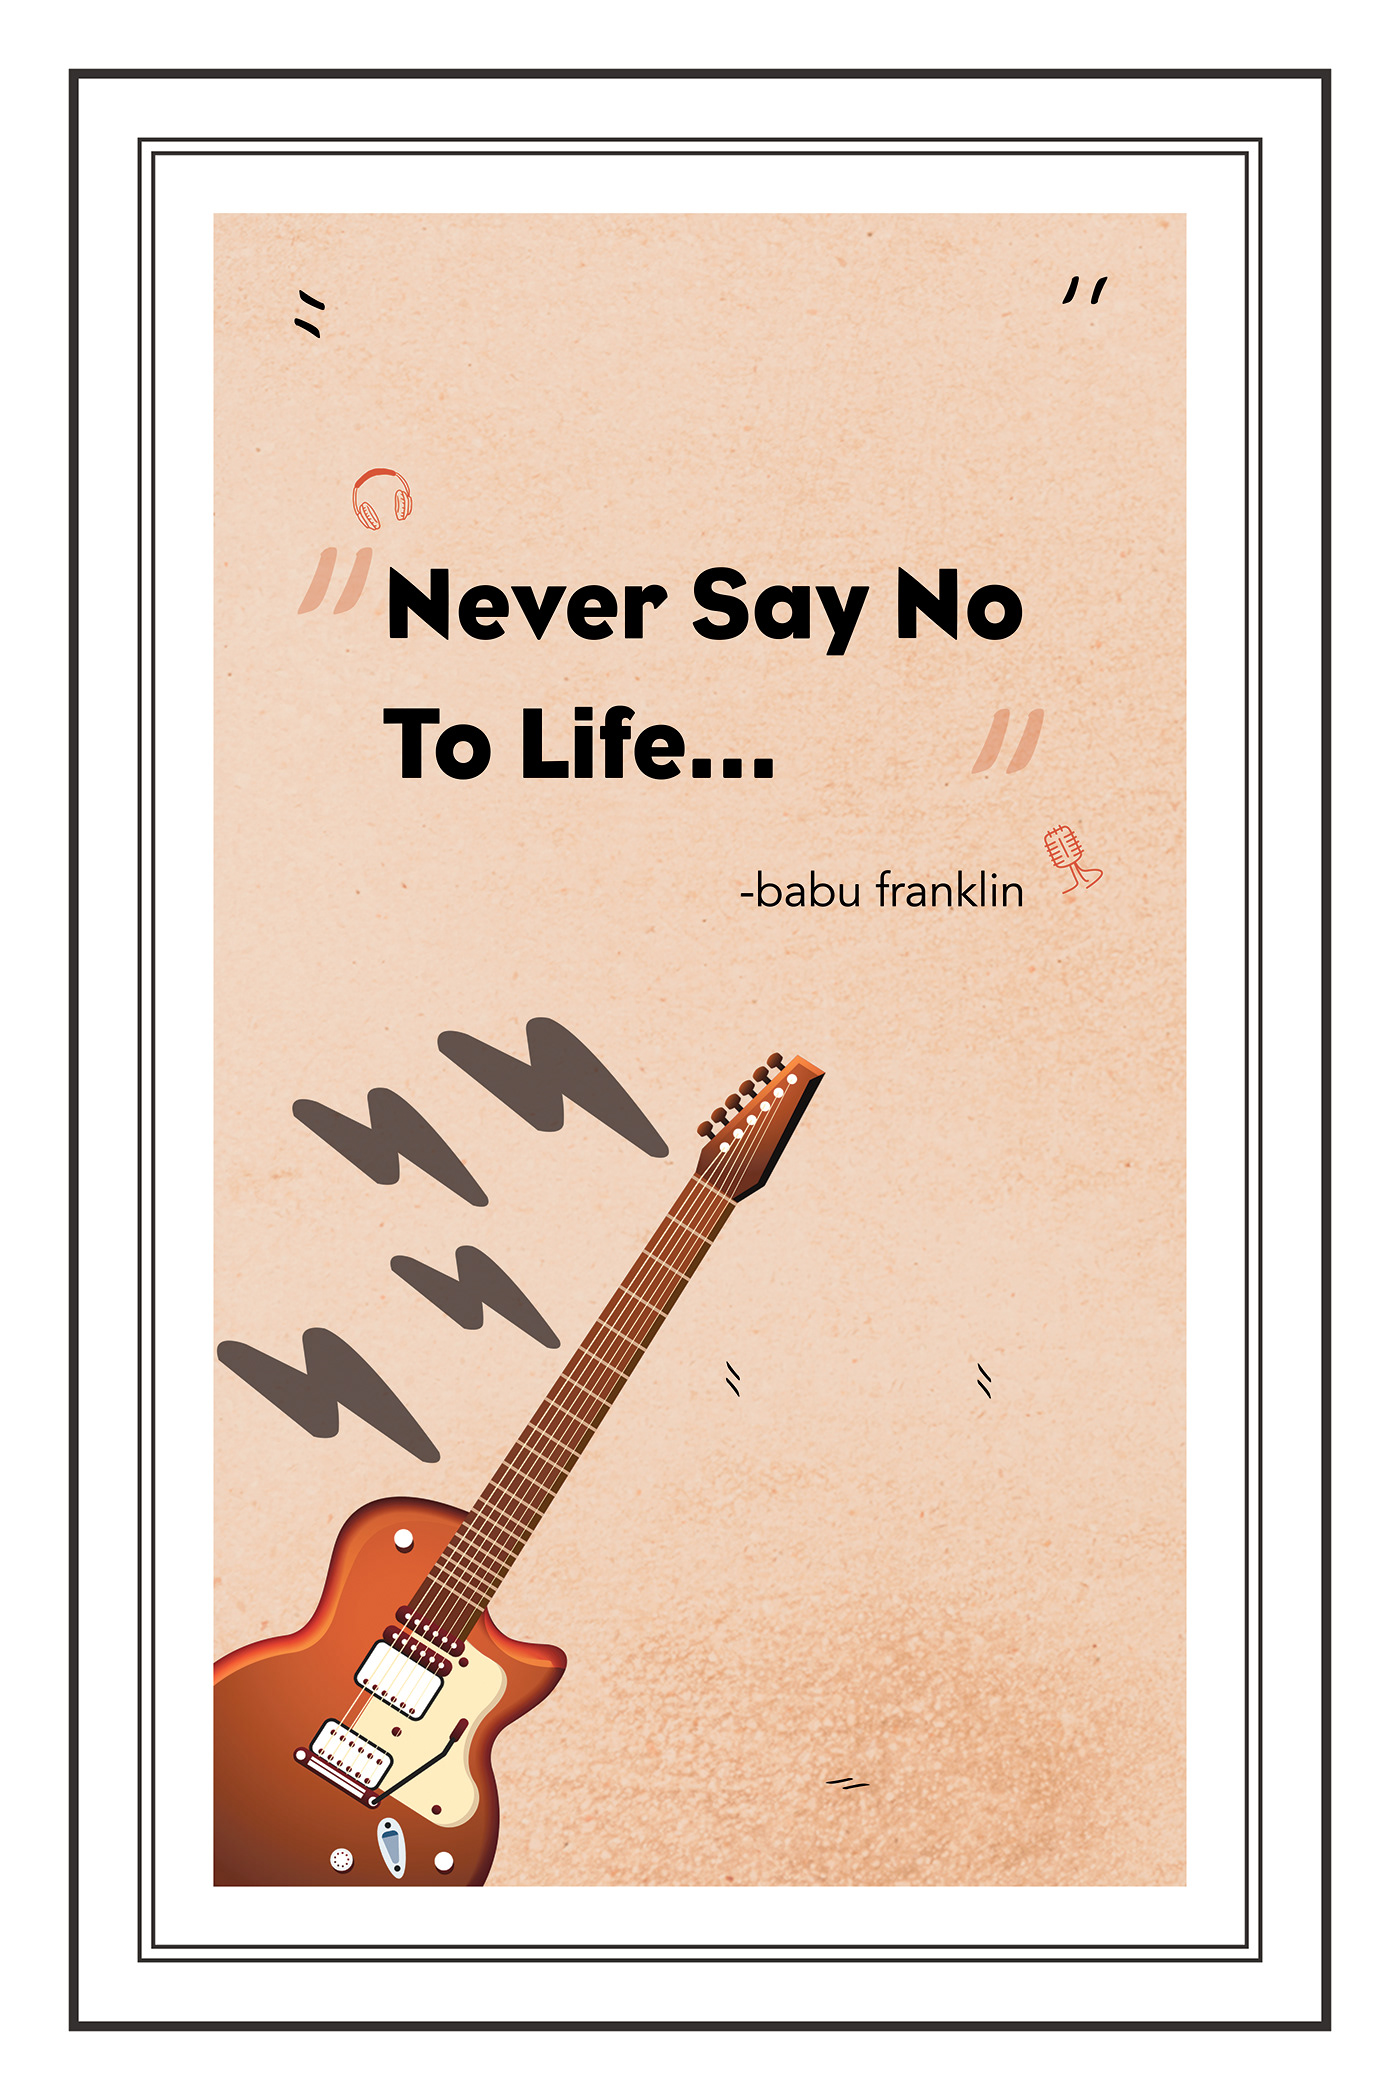 Never say no to life...